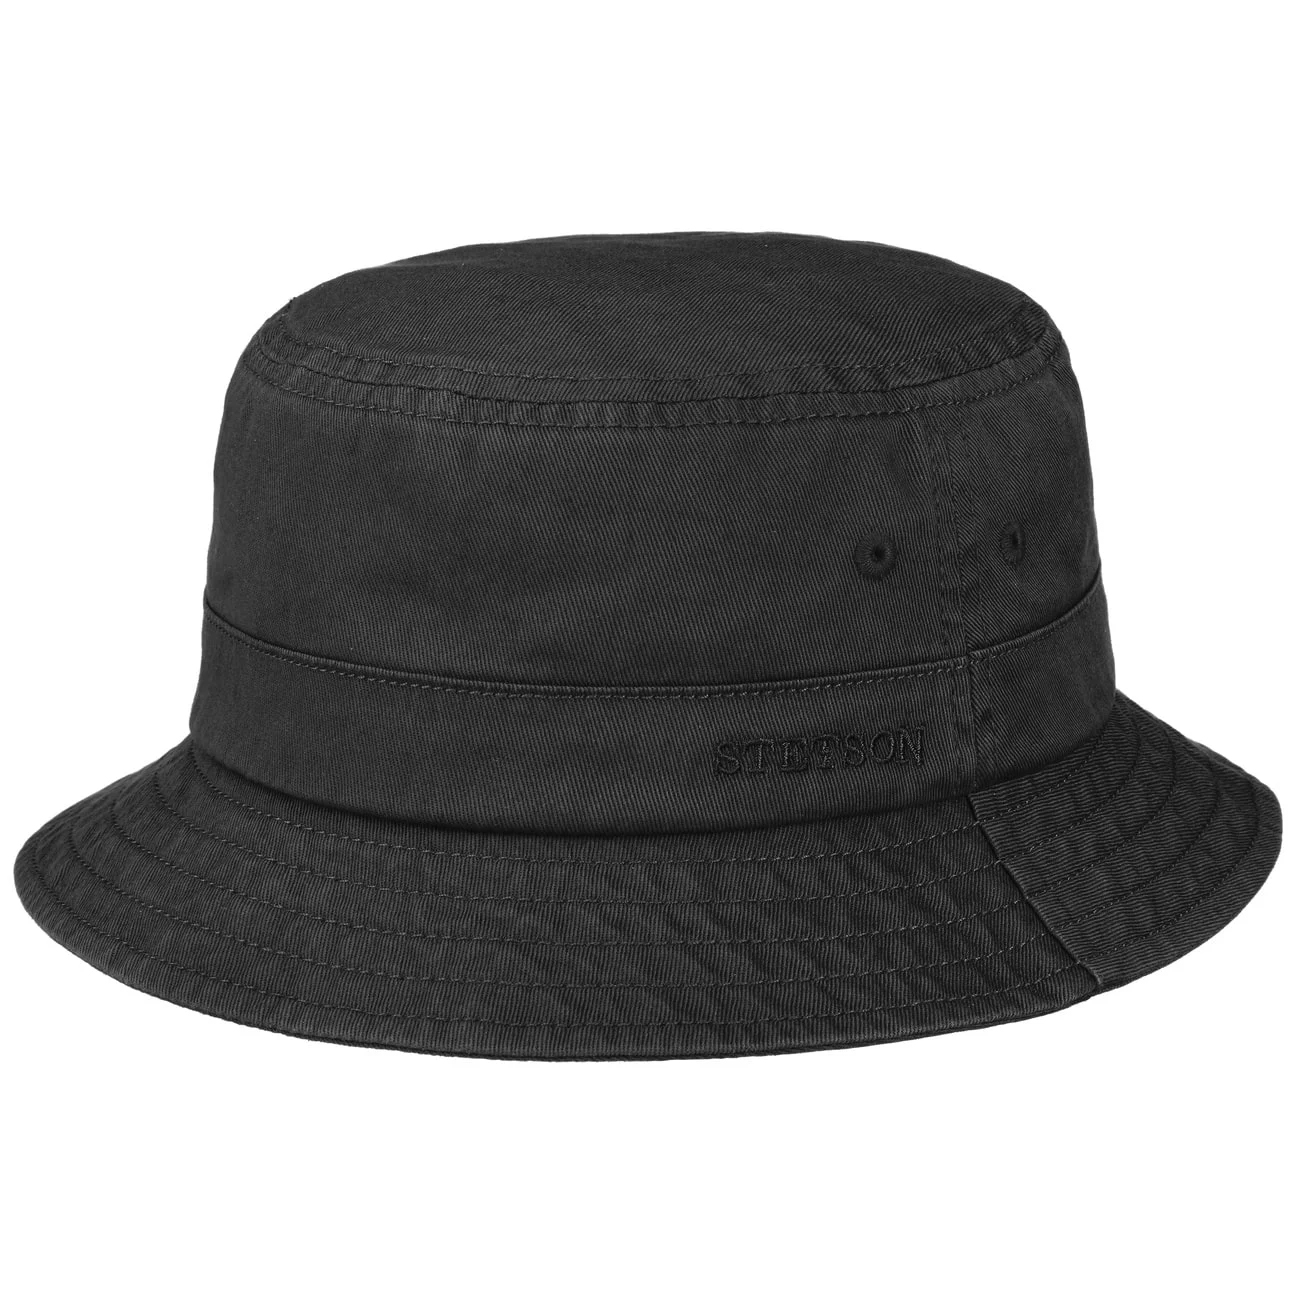 Stetson - Twill Bucket Hat - Black